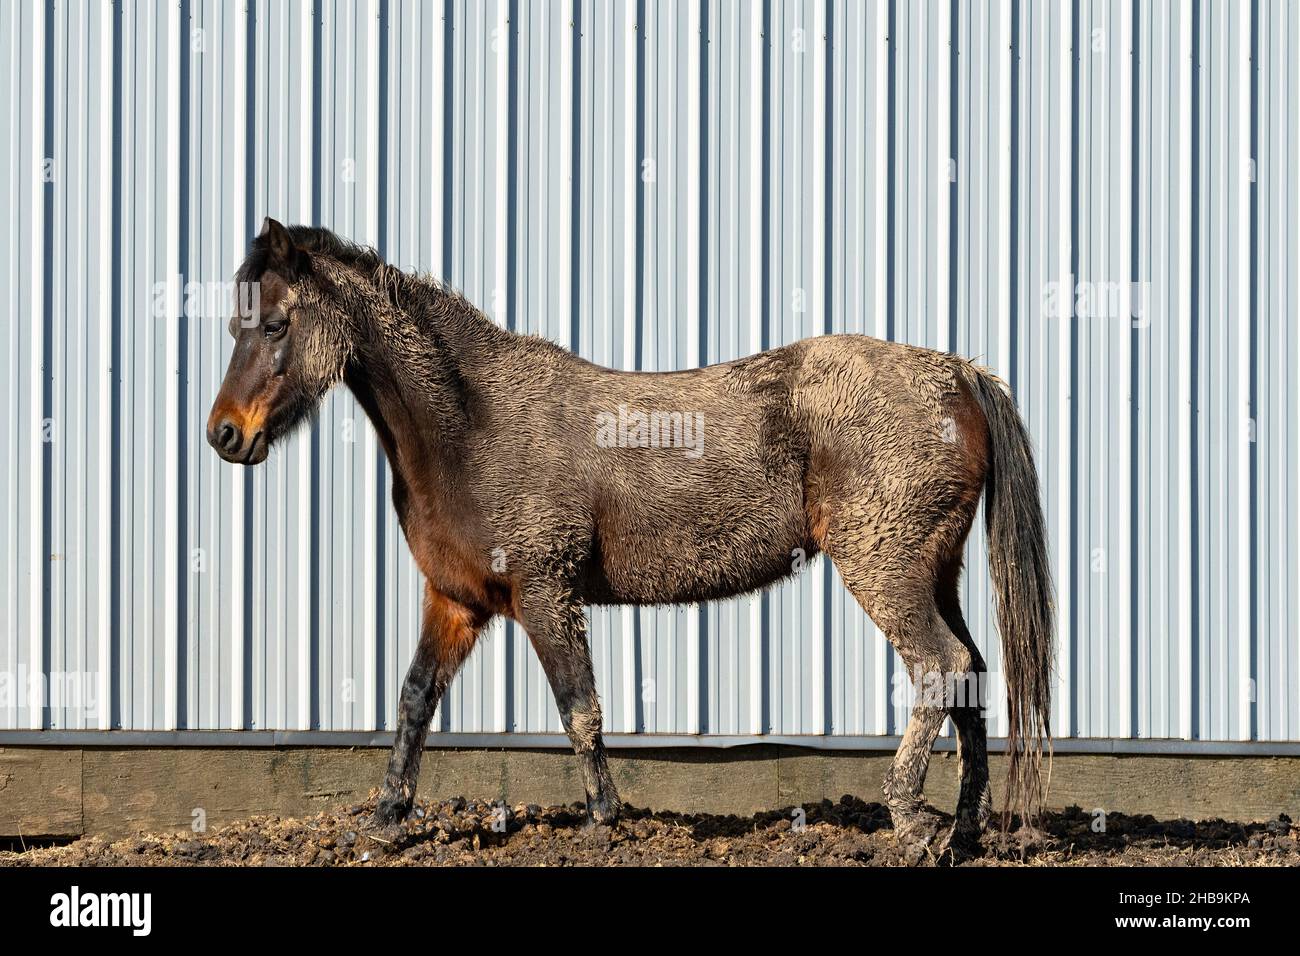 Muddy horse in winter. Stock Photo